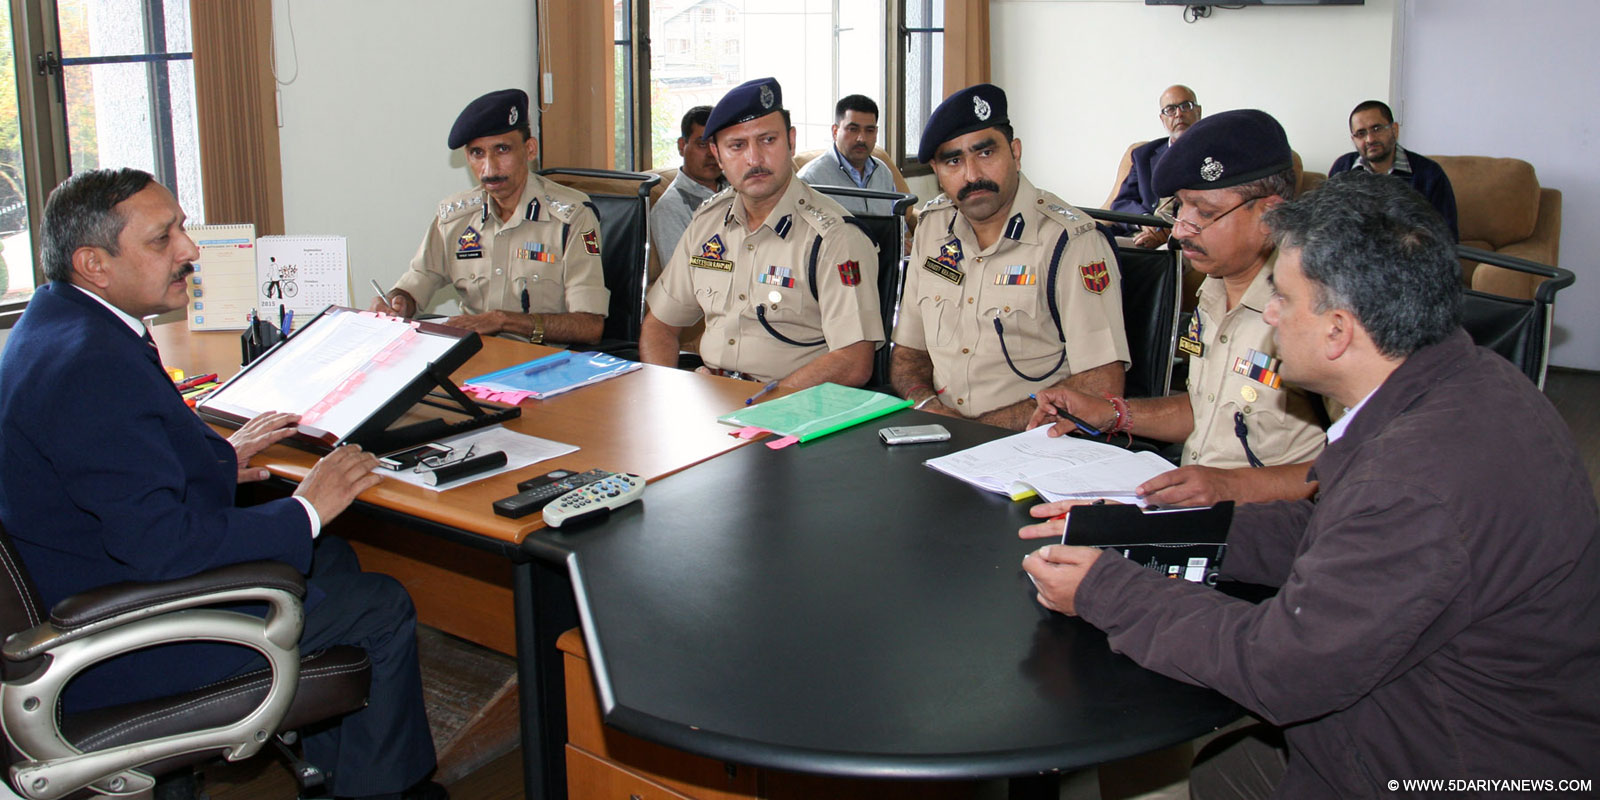 Navin Agarwal stresses on enhancing professional skills of cops through regular training